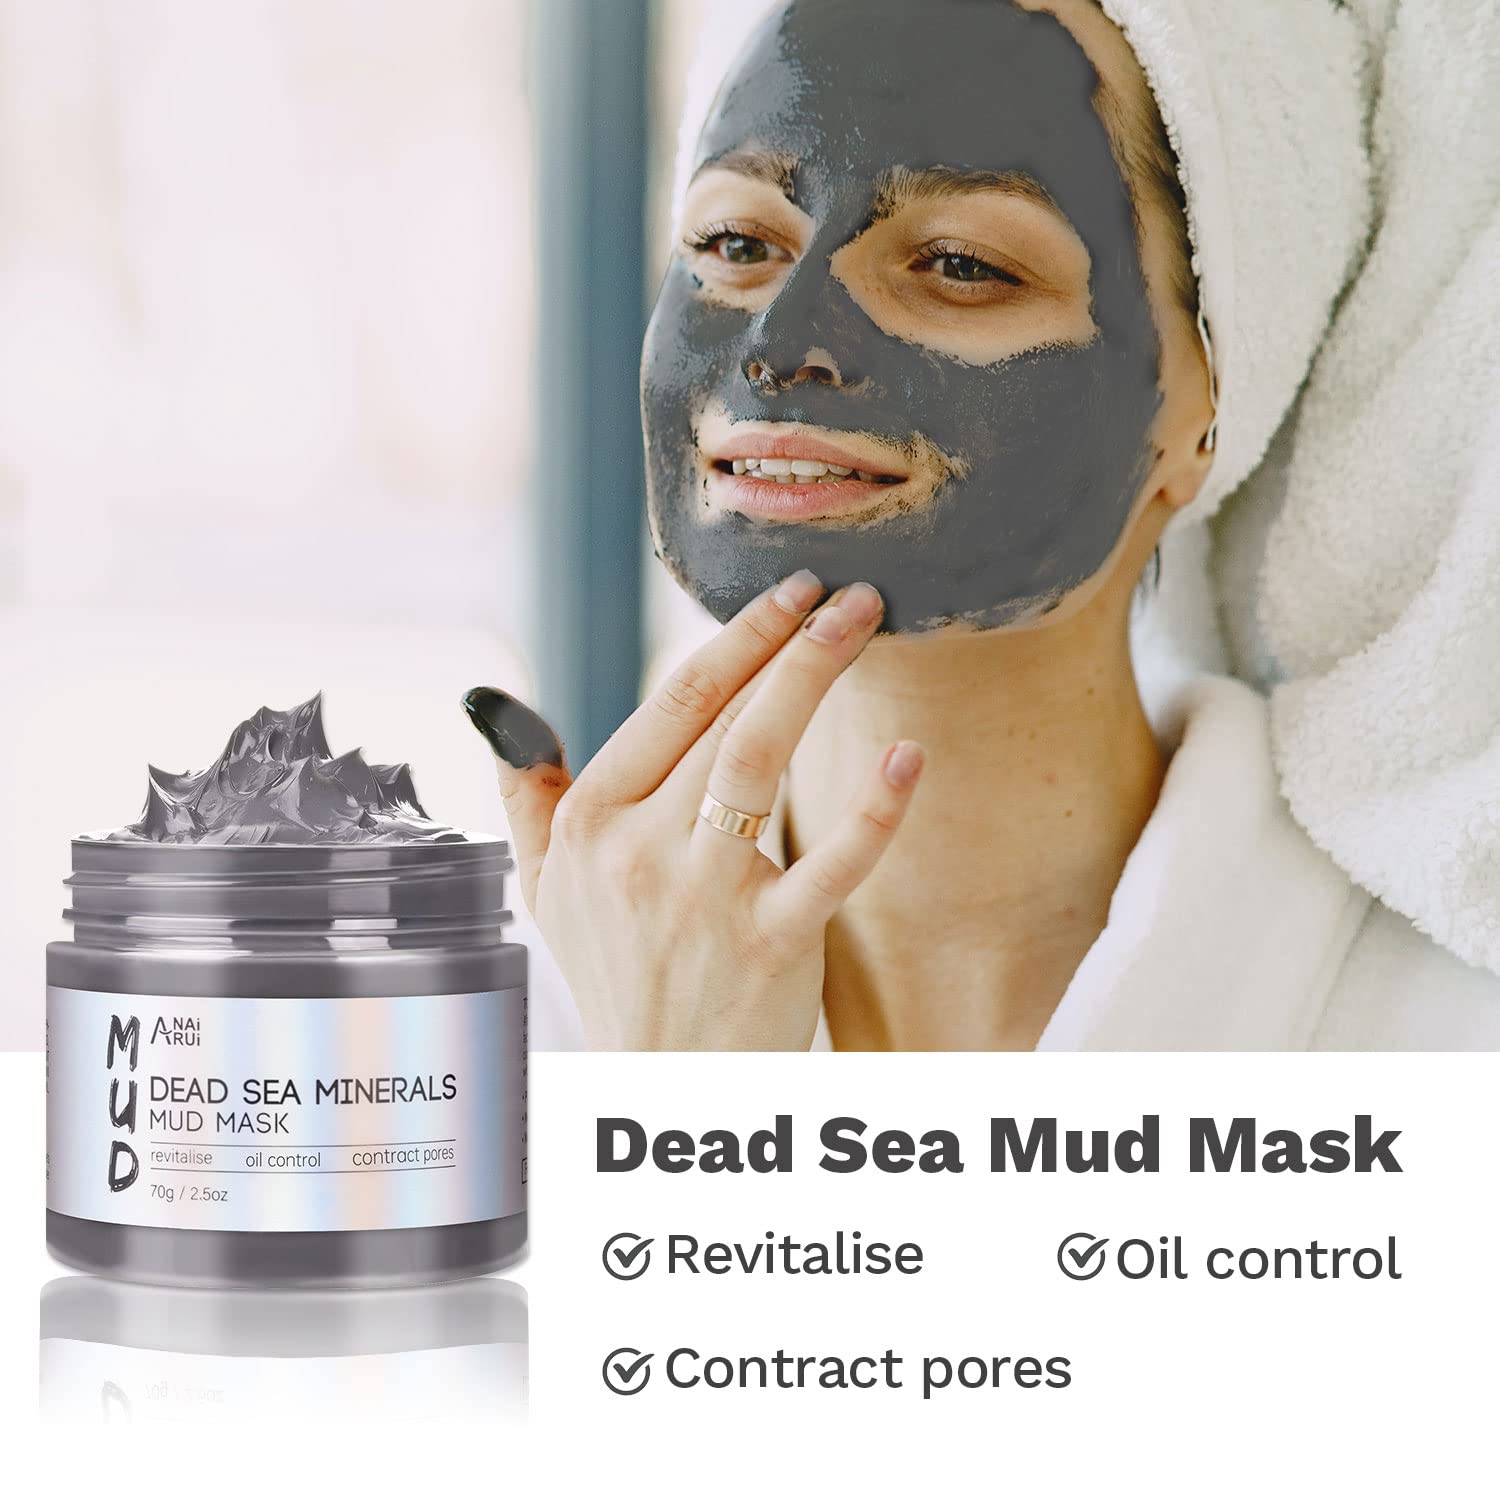 Turmeric Clay Mask, Green Tea and Dead Sea Minerals, Spa Facial Mask Set 2.5 oz each